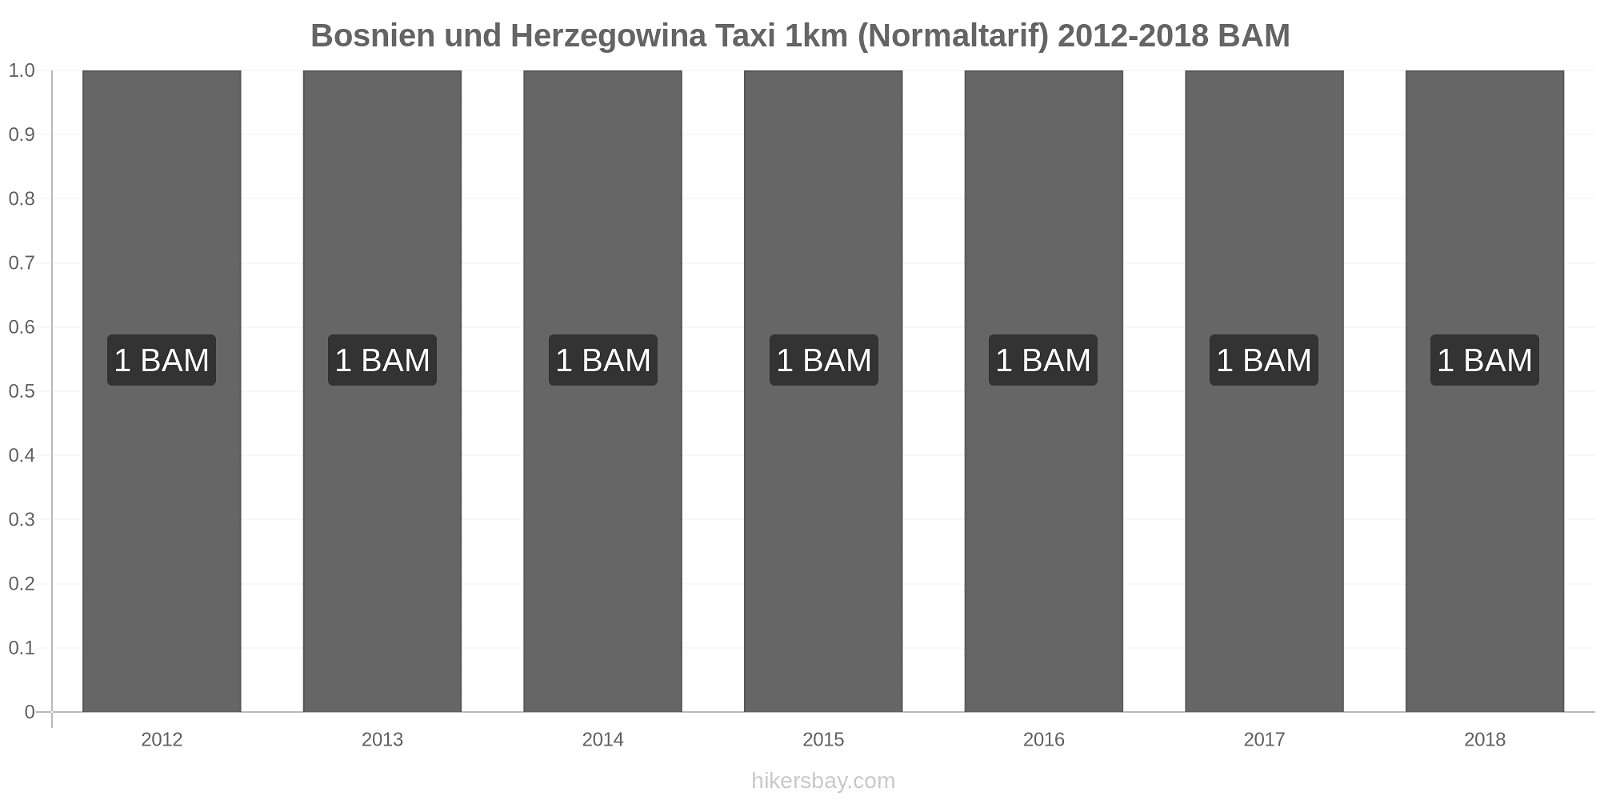 Bosnien und Herzegowina Preisänderungen Taxi 1km (Normaltarif) hikersbay.com